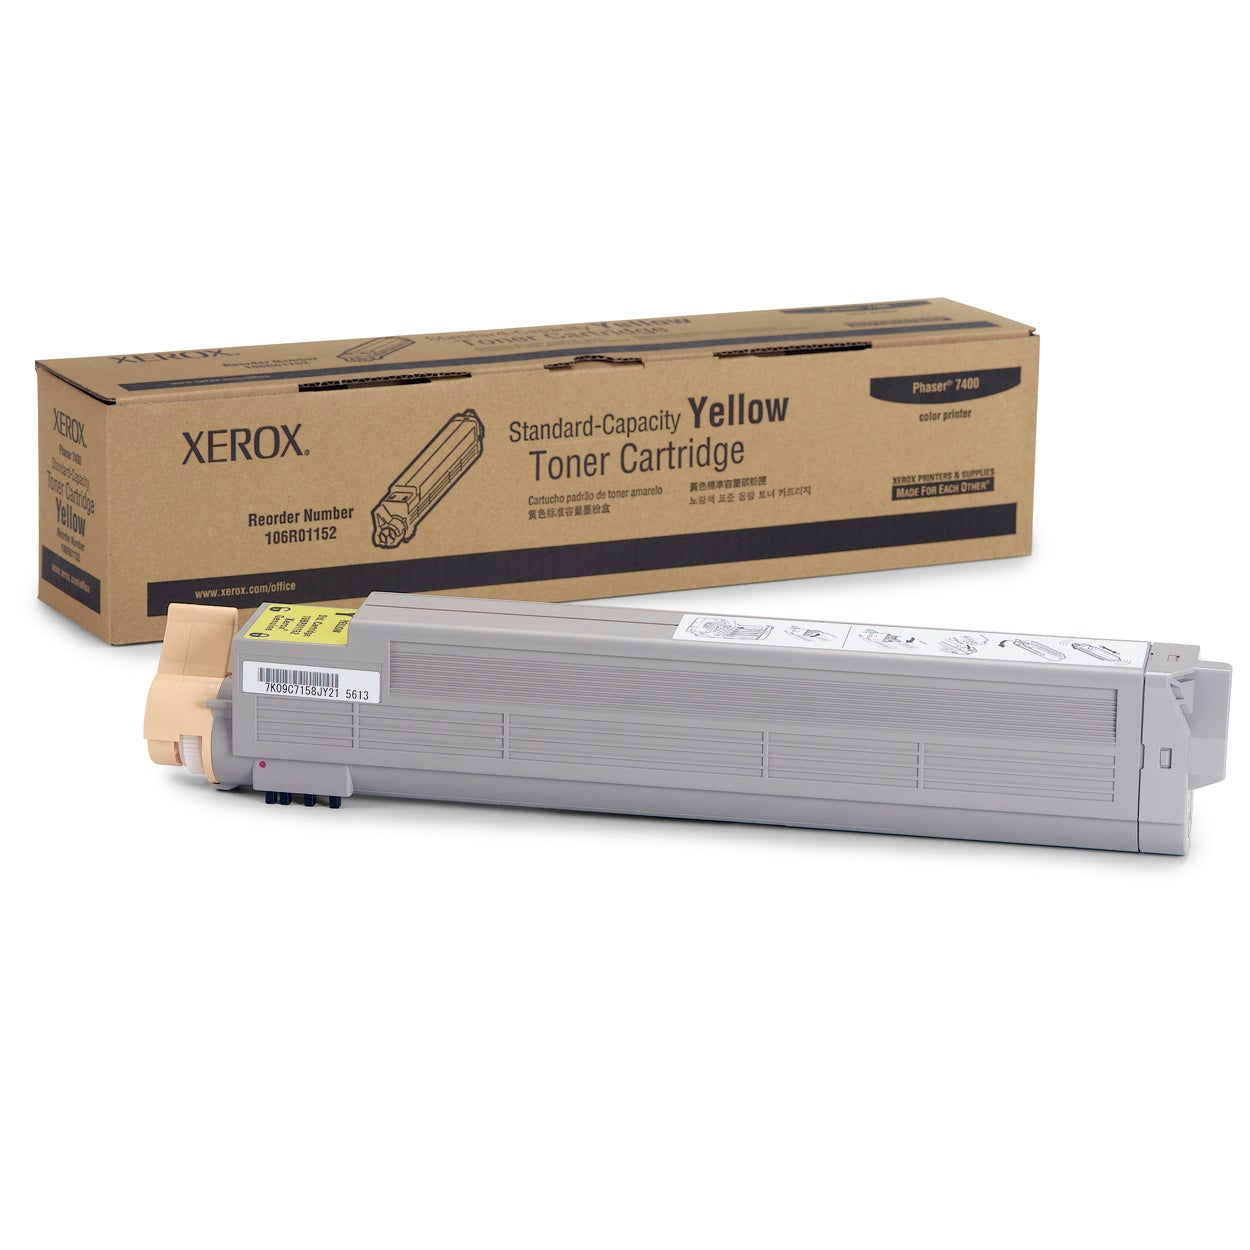 Absolute Toner Xerox 106R01152 Genuine Yellow Toner Cartridge For Xerox Phaser 7400 Color Laser Printer Original Xerox Cartridges